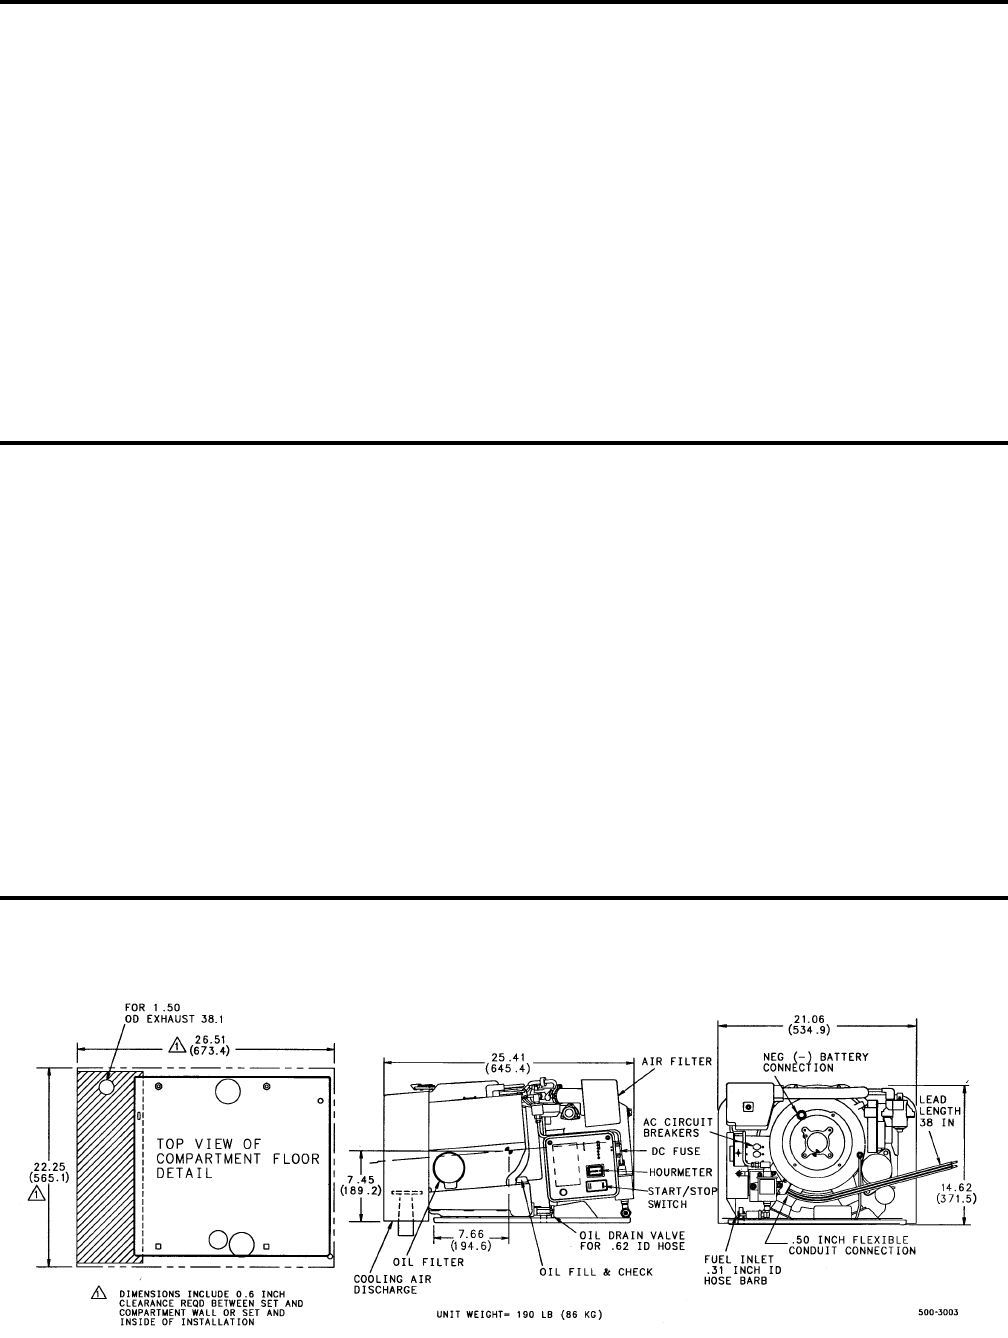 Diagram Onan Generator Wiring Diagram 611 1267 Full Version Hd Quality 611 1267 Ablackwiring Lezionigis It